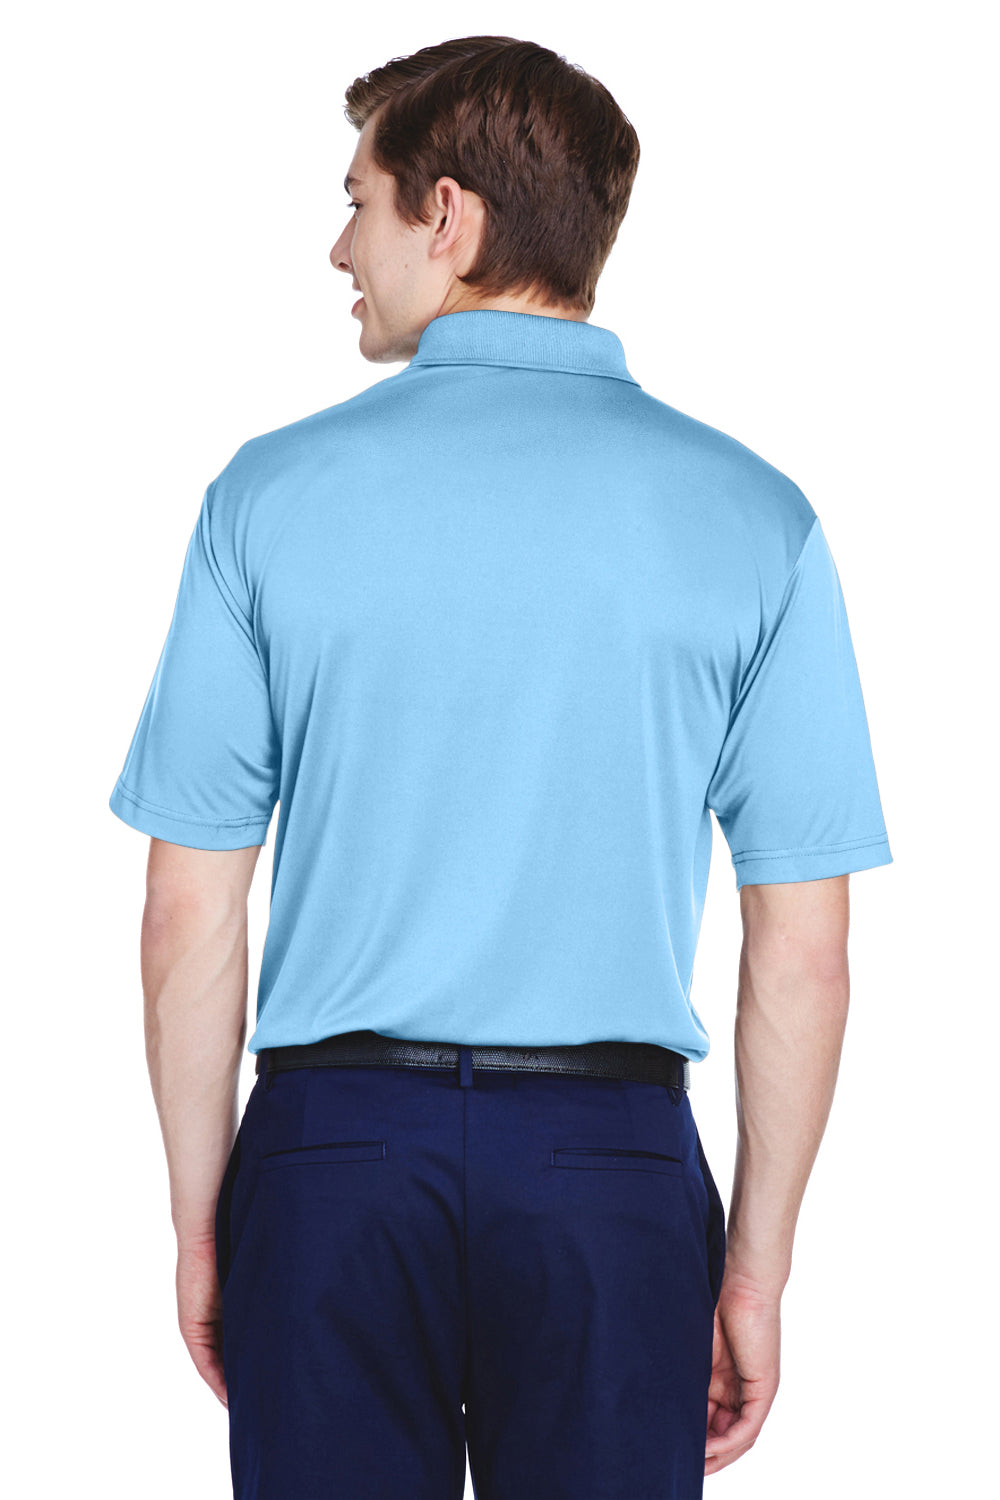 UltraClub 8610 Mens Cool & Dry 8 Star Elite Performance Moisture Wicking Short Sleeve Polo Shirt Columbia Blue Back